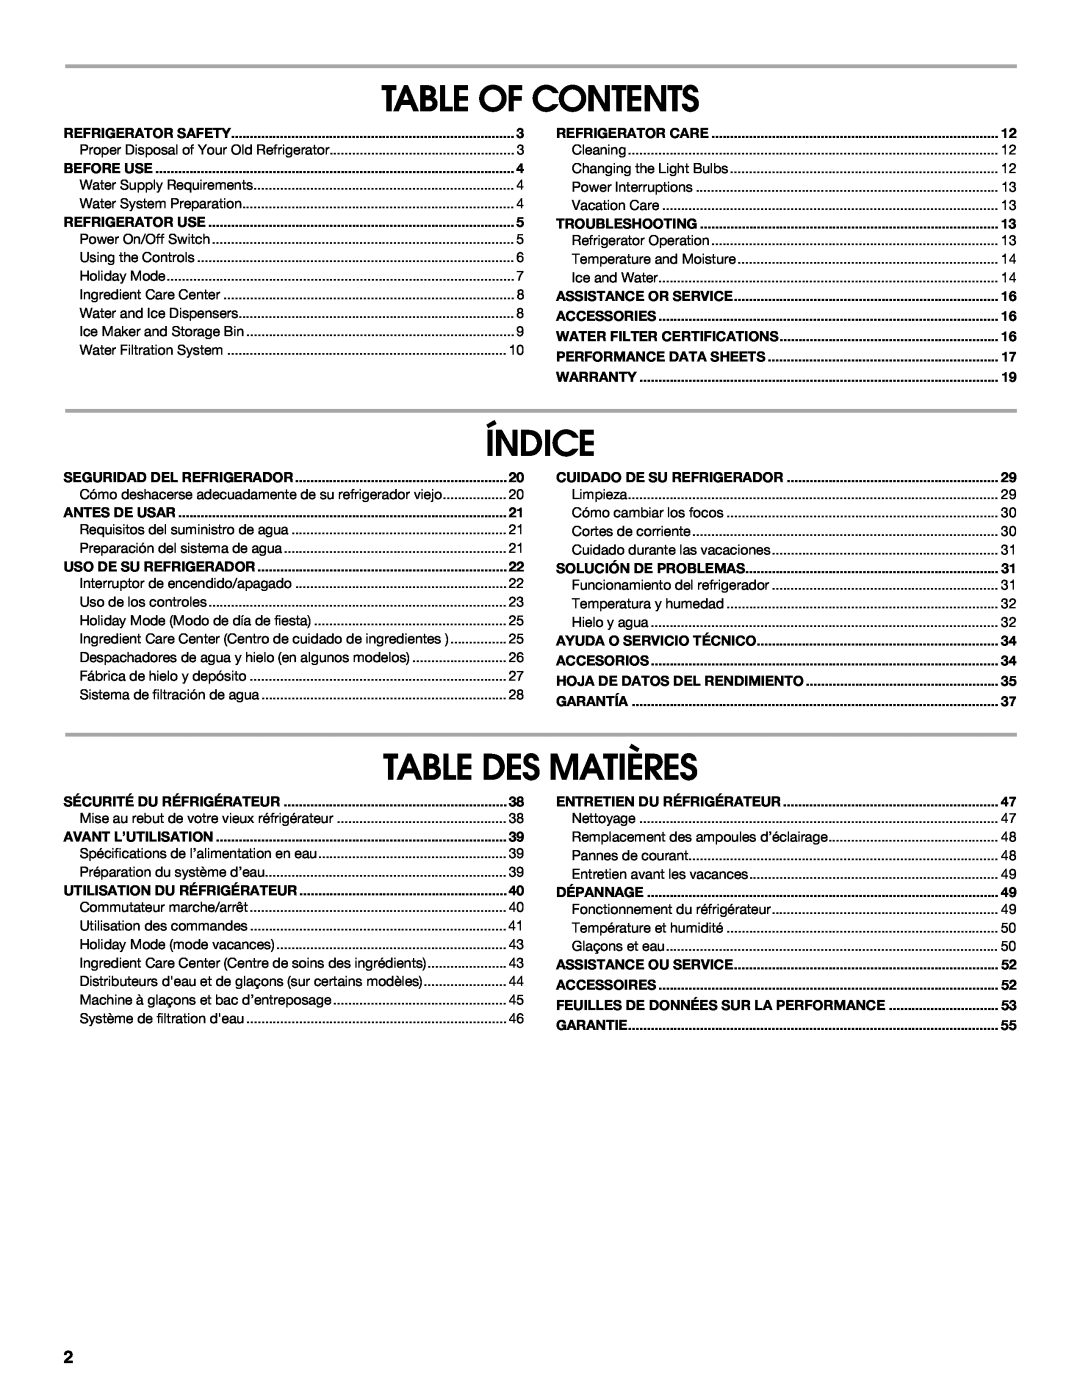 Jenn-Air W10303988A manual Table Of Contents, Índice, Table Des Matières 